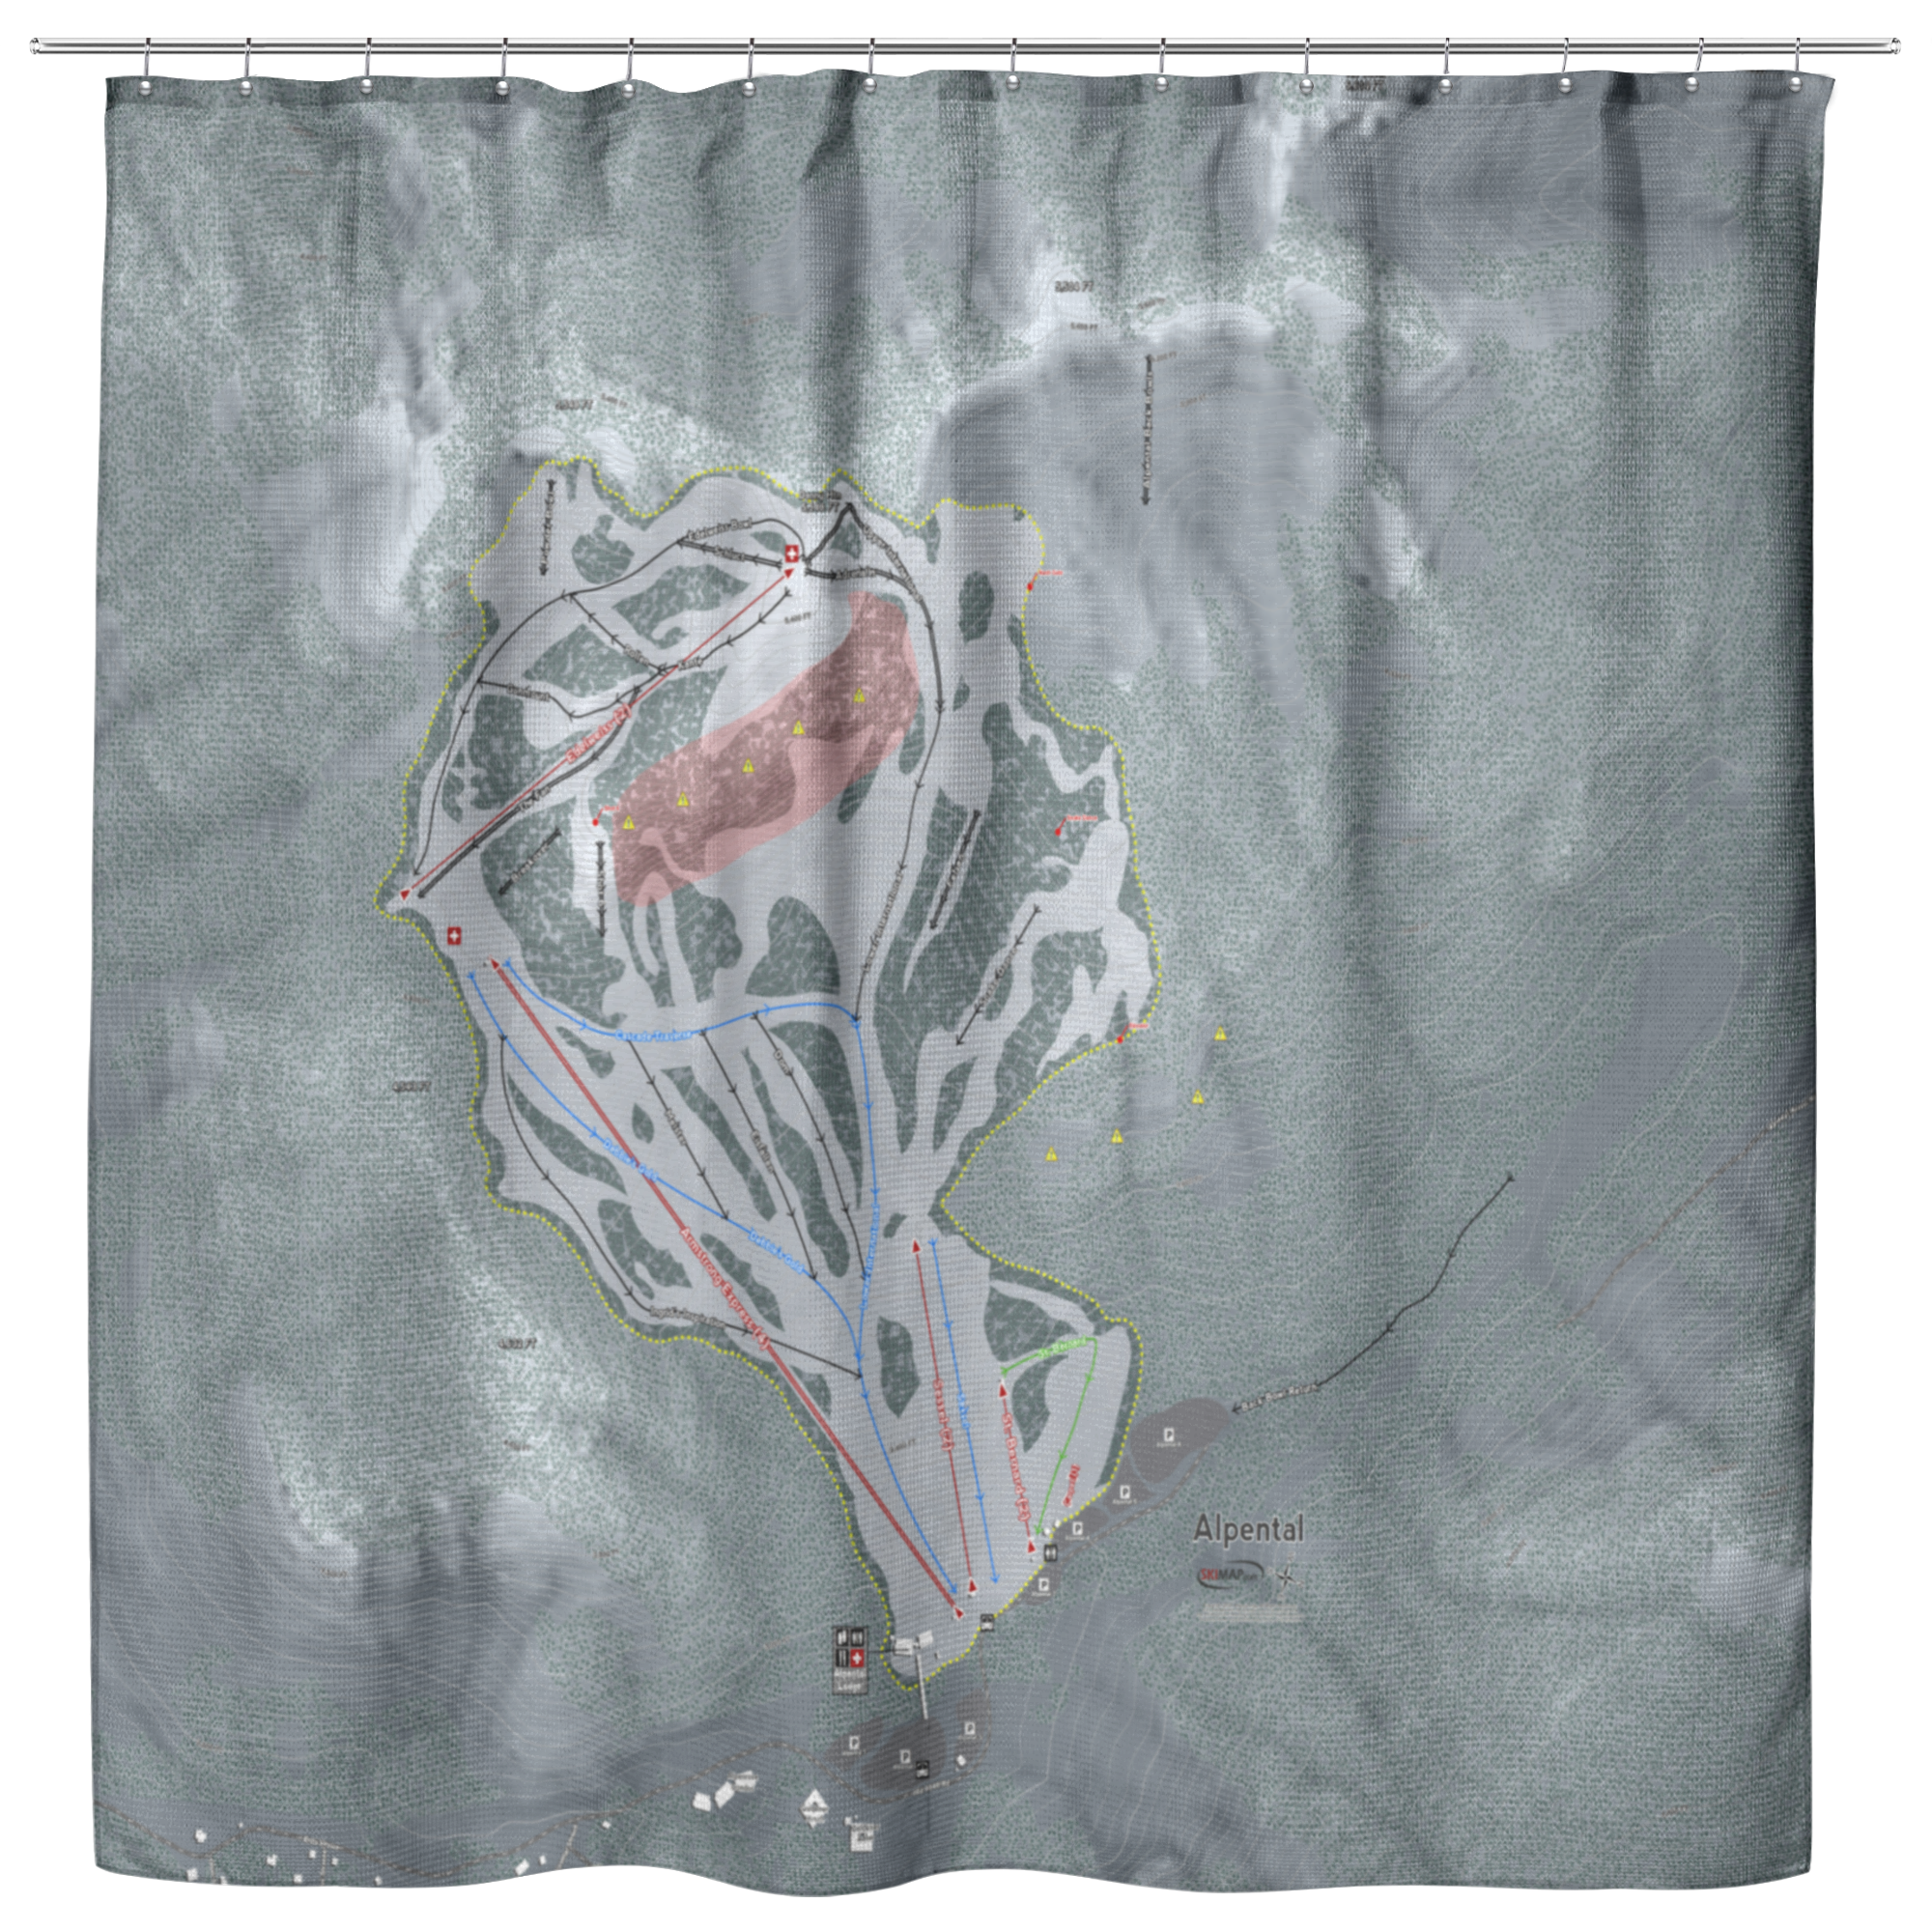 Alpental Ski Trail Map Shower Curtain - Powderaddicts